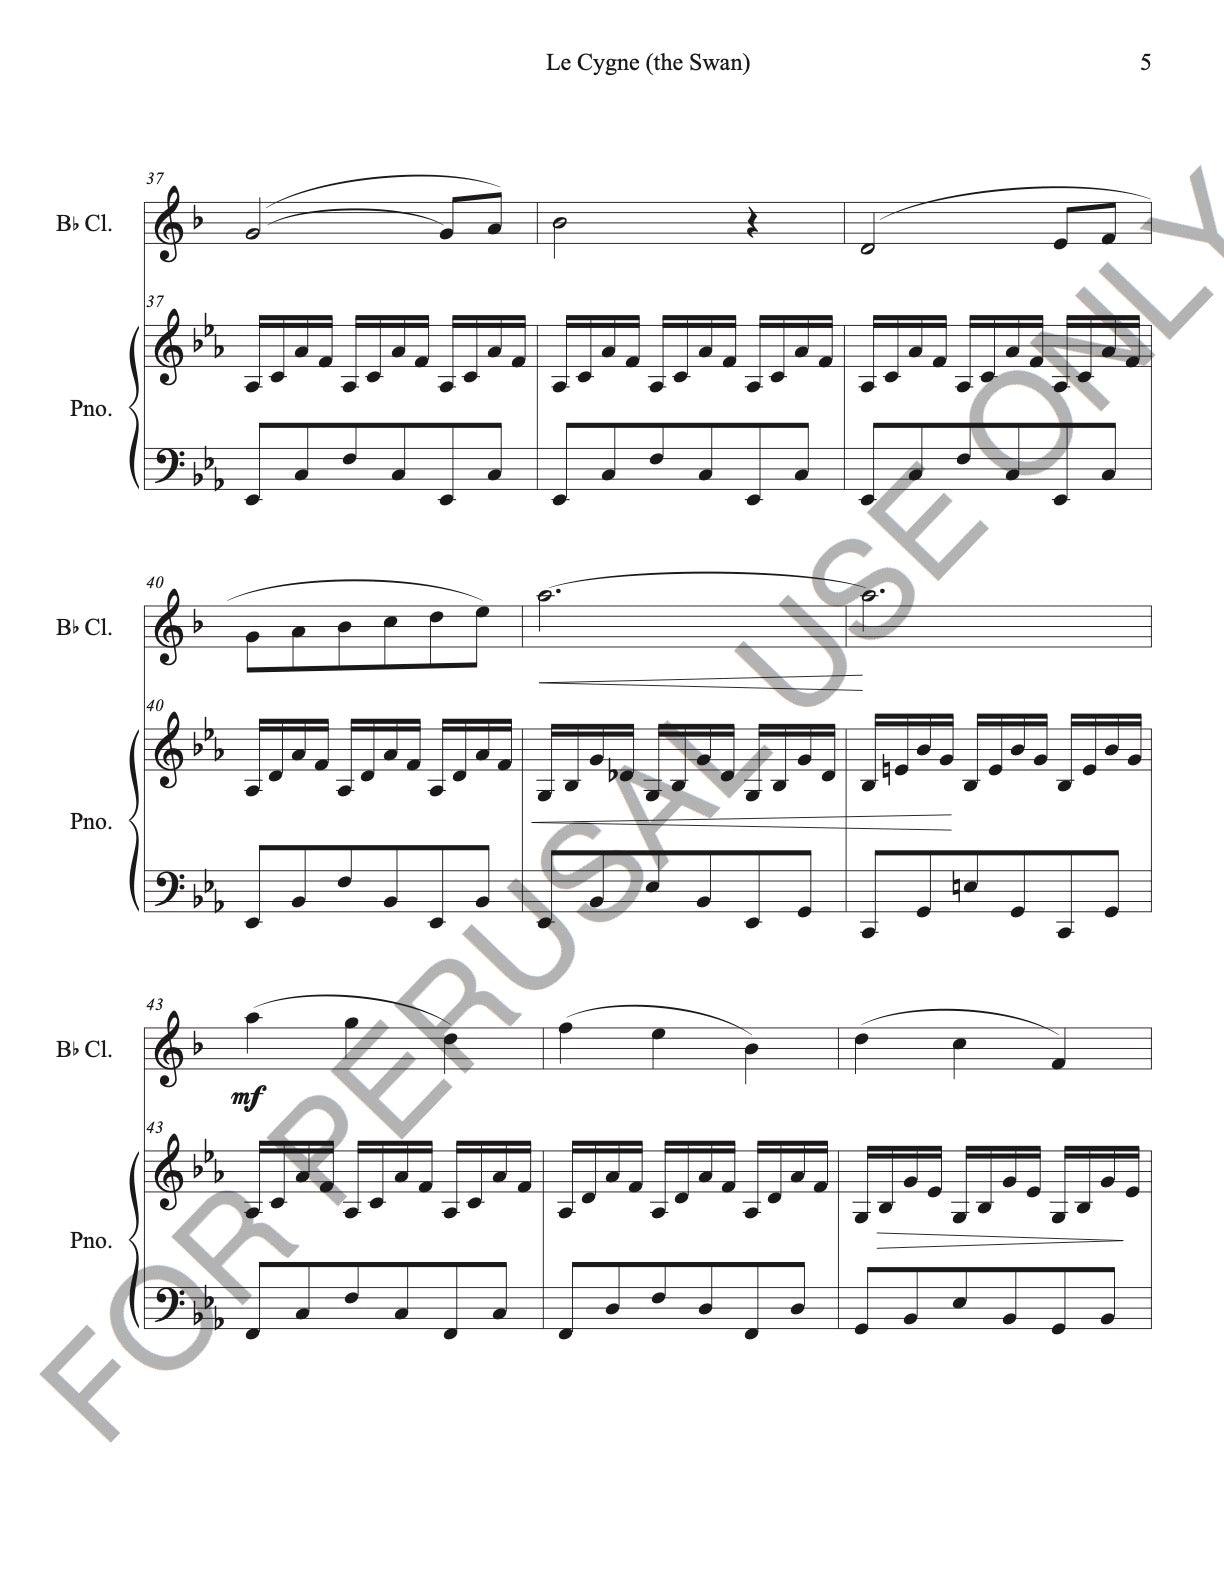 Bb Clarinet and Piano sheet music: The Swan by Saint-Saëns (score+parts+mp3) - ChaipruckMekara